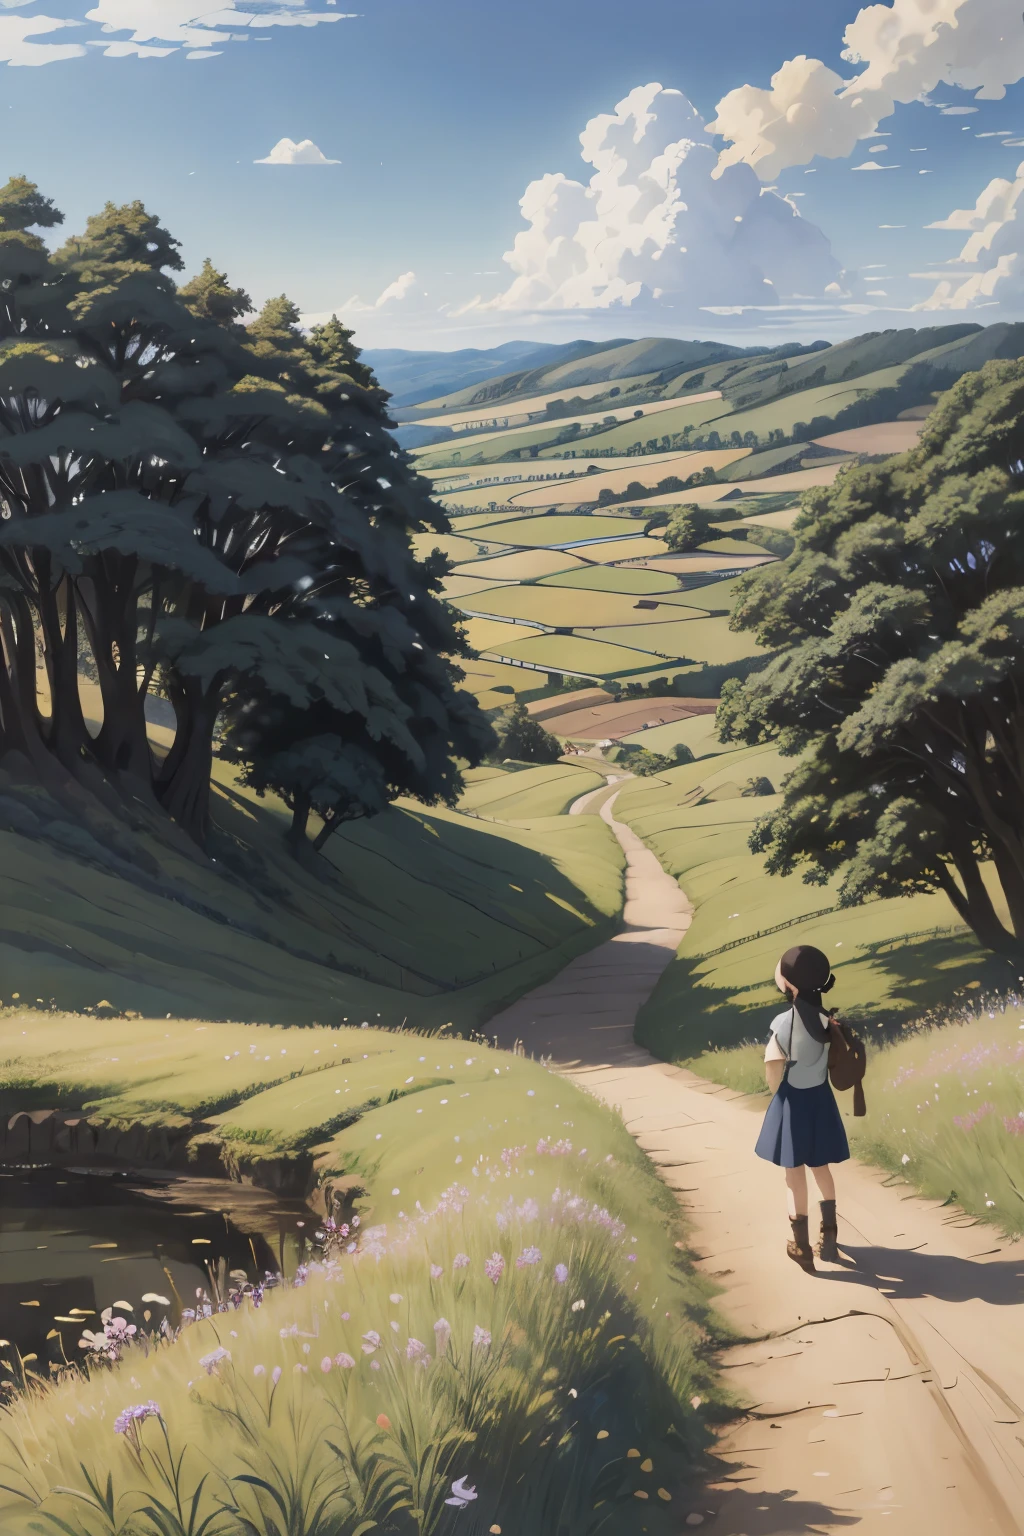 realista, Real, bela e deslumbrante paisagem pintura a óleo Studio Ghibli Hayao Miyazaki Pétalas Pastagem Céu Azul Pastagem Estrada Rural,prédio, garota linda